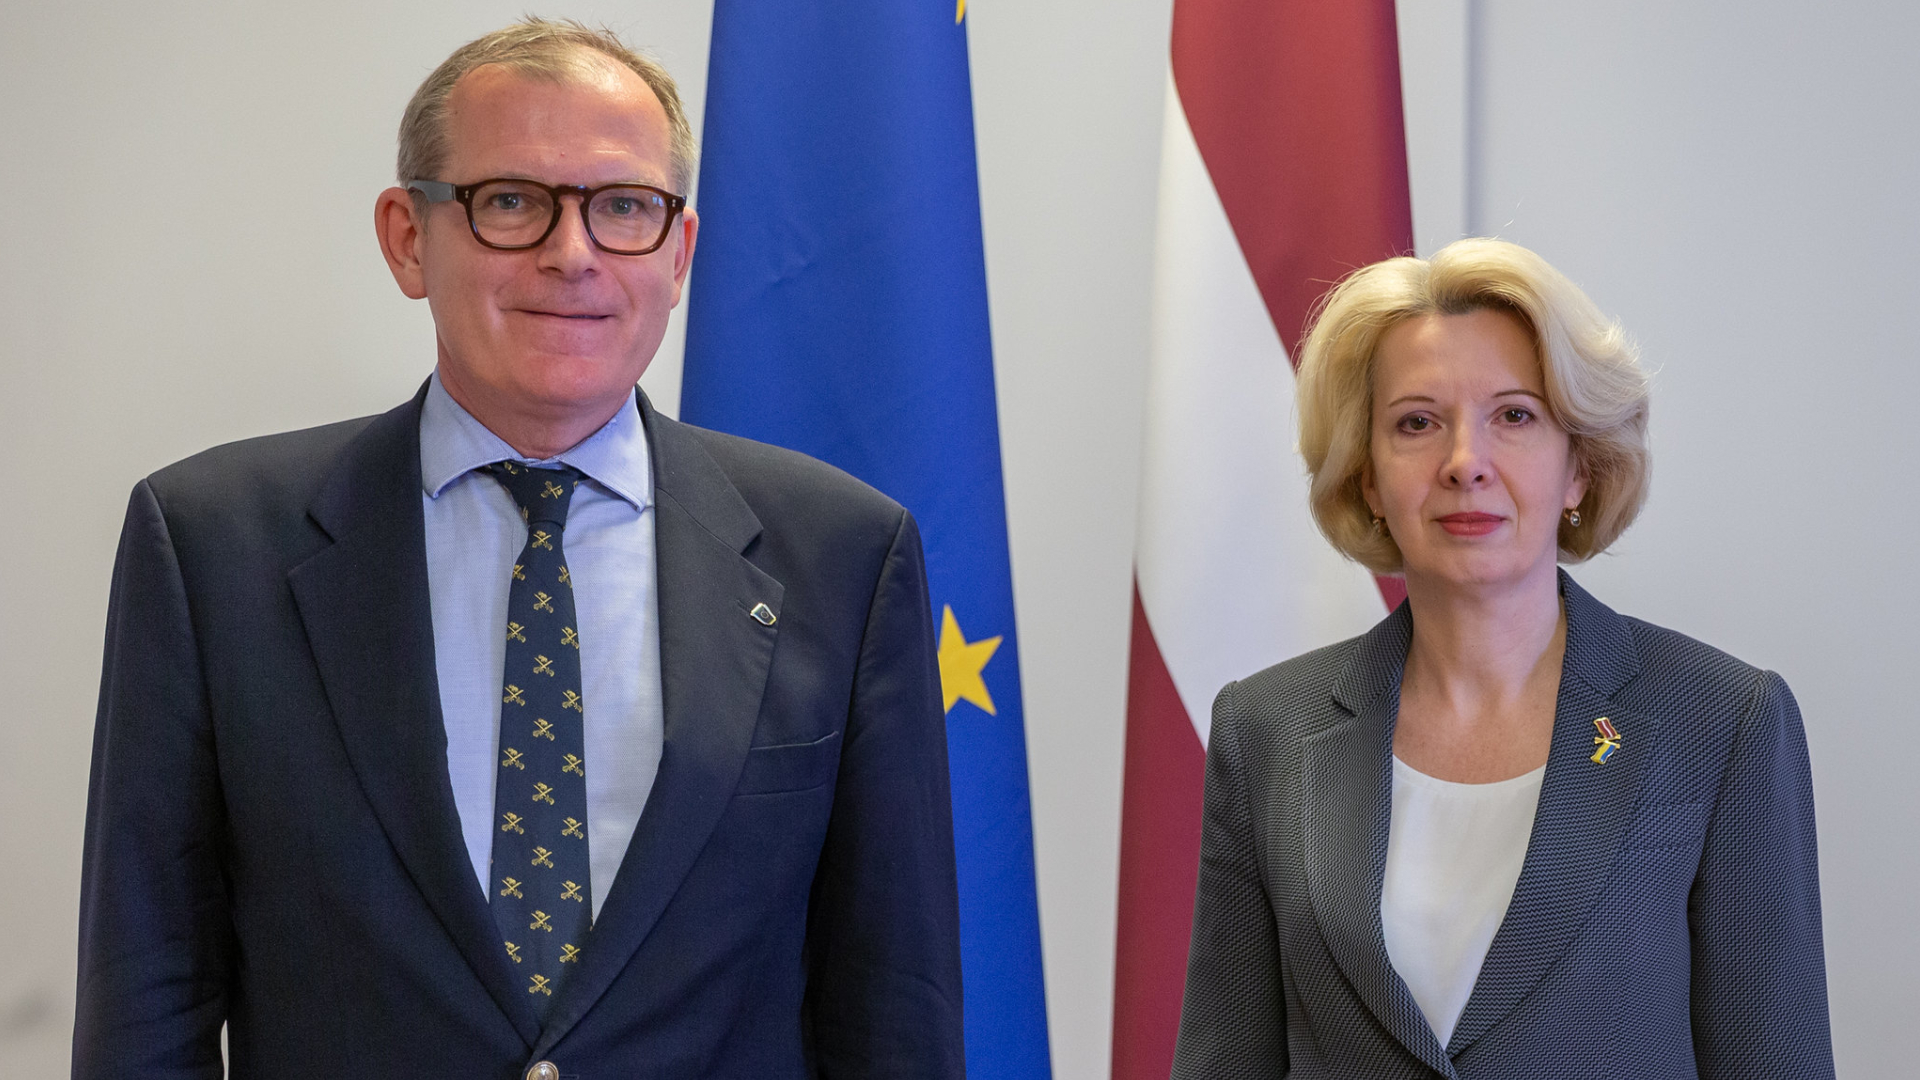 EDA Chief Executive visits Latvia